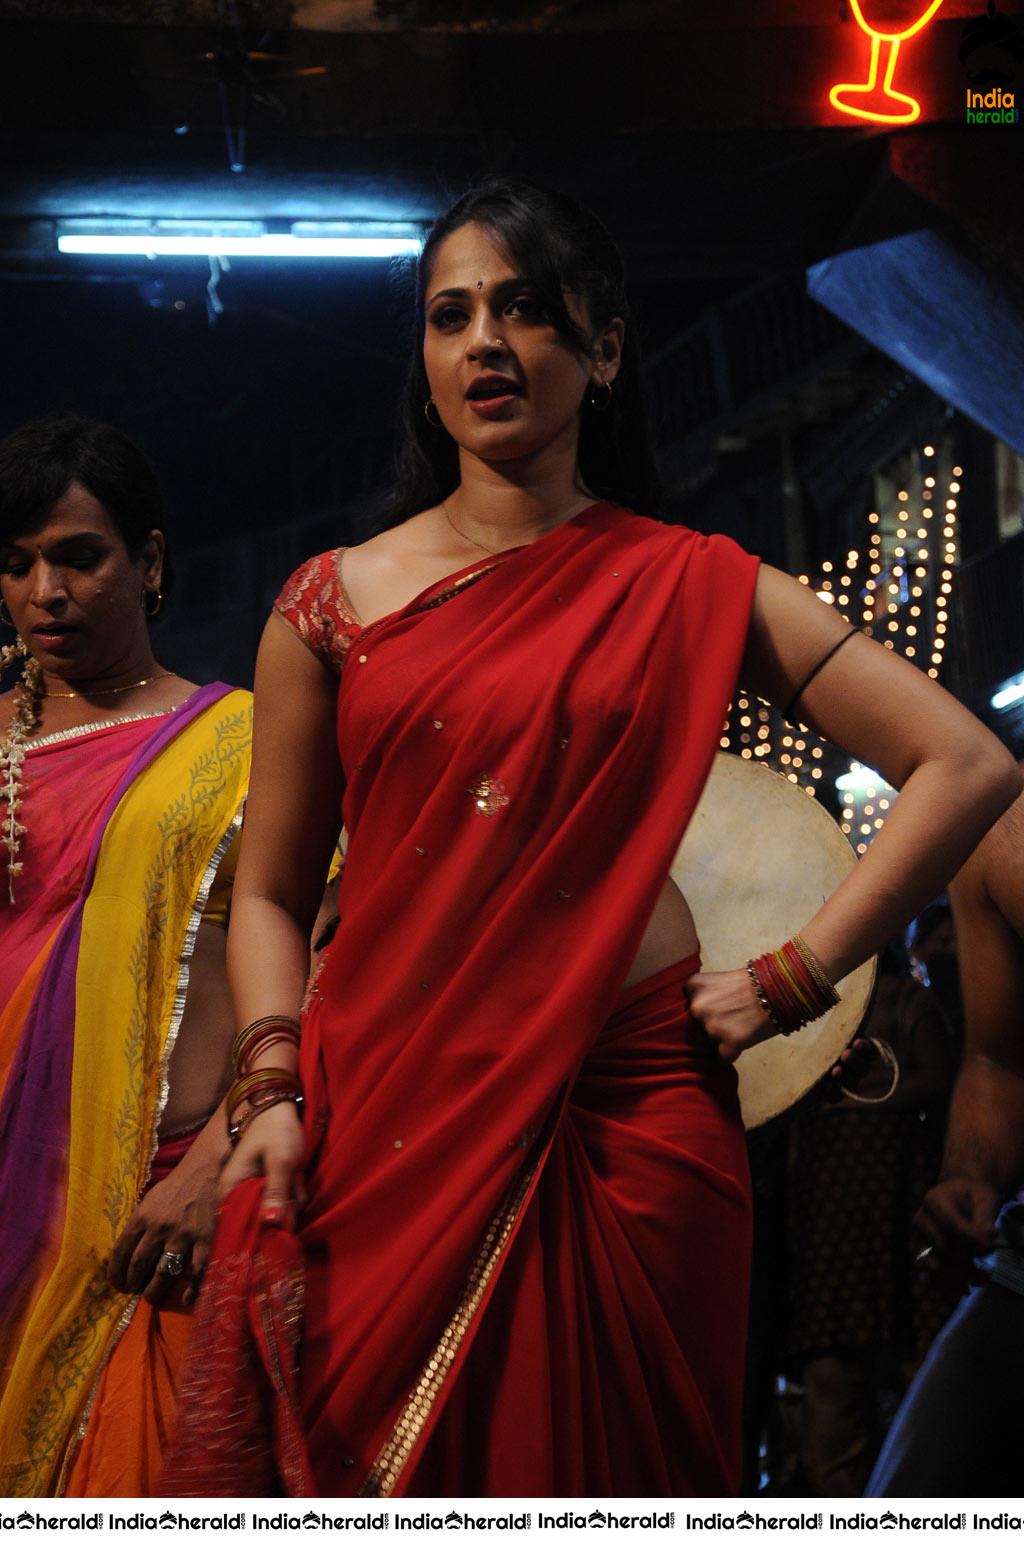 Anushka Sizzling Hot in Red Saree Stills from Vaanam movie Set 1